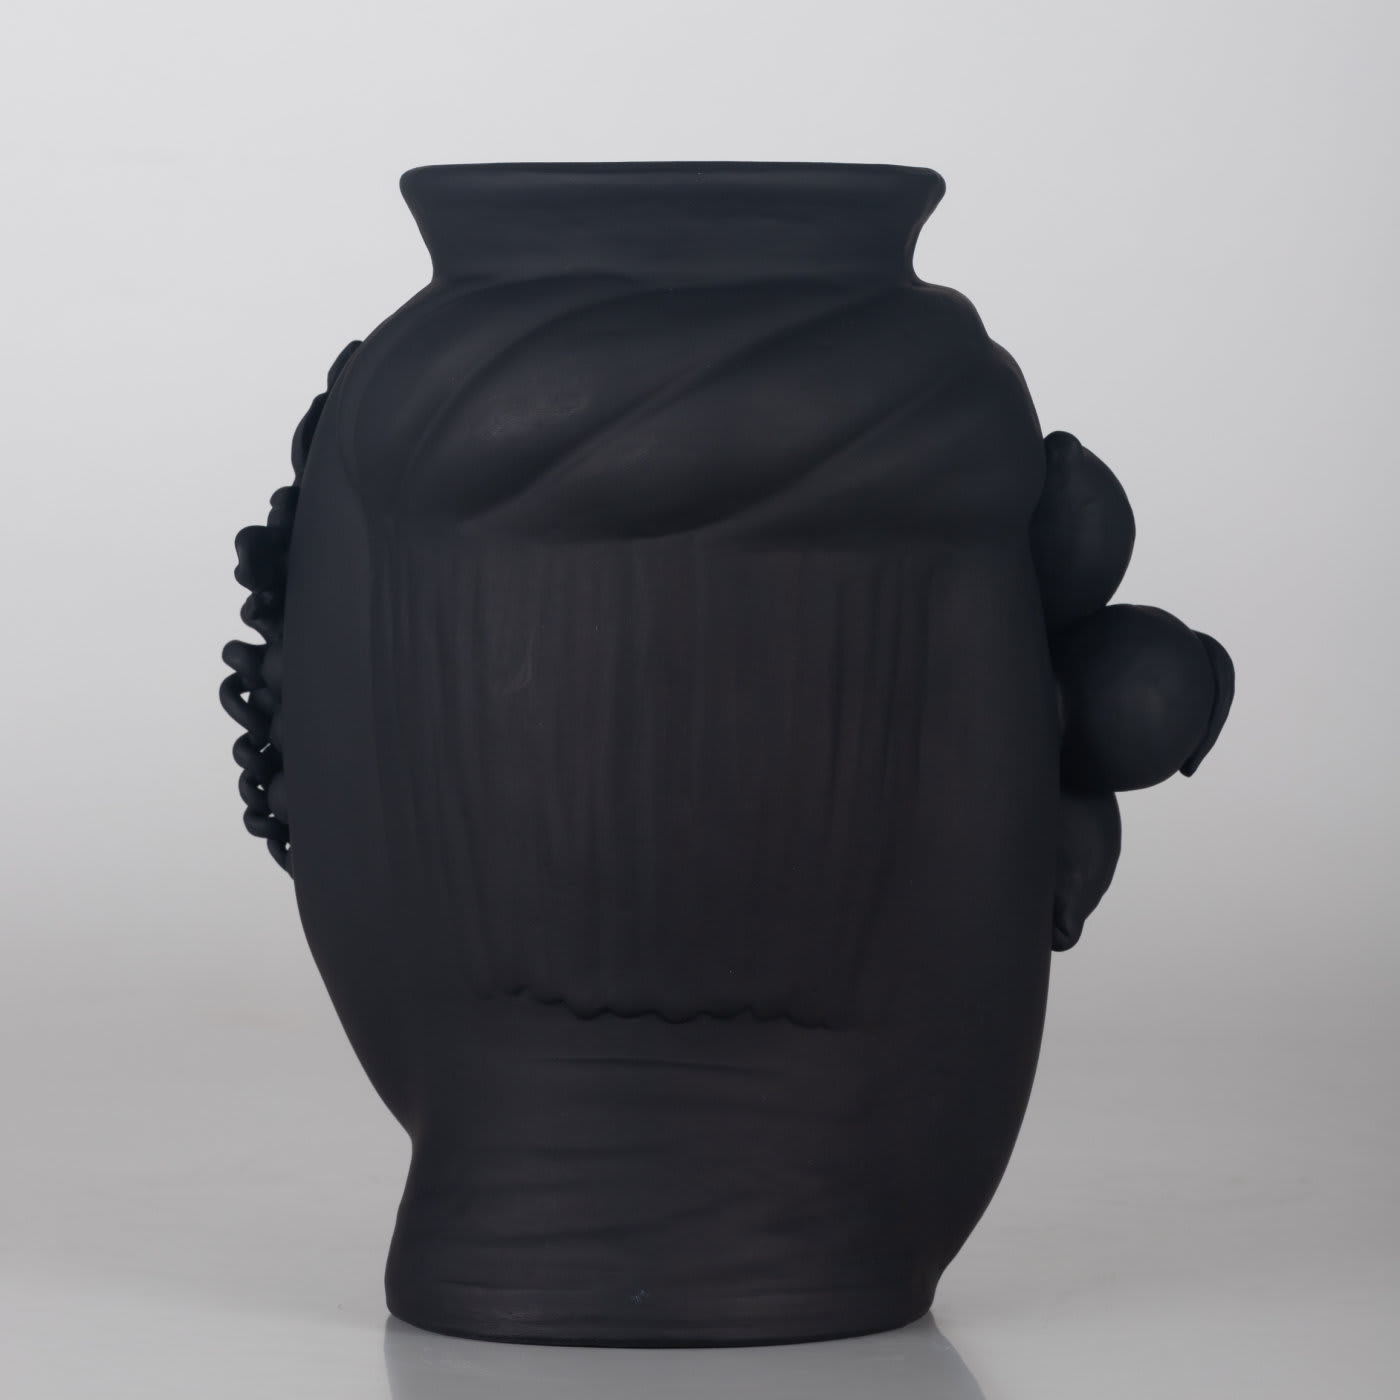 Cecì Black Vase - Stefania Boemi